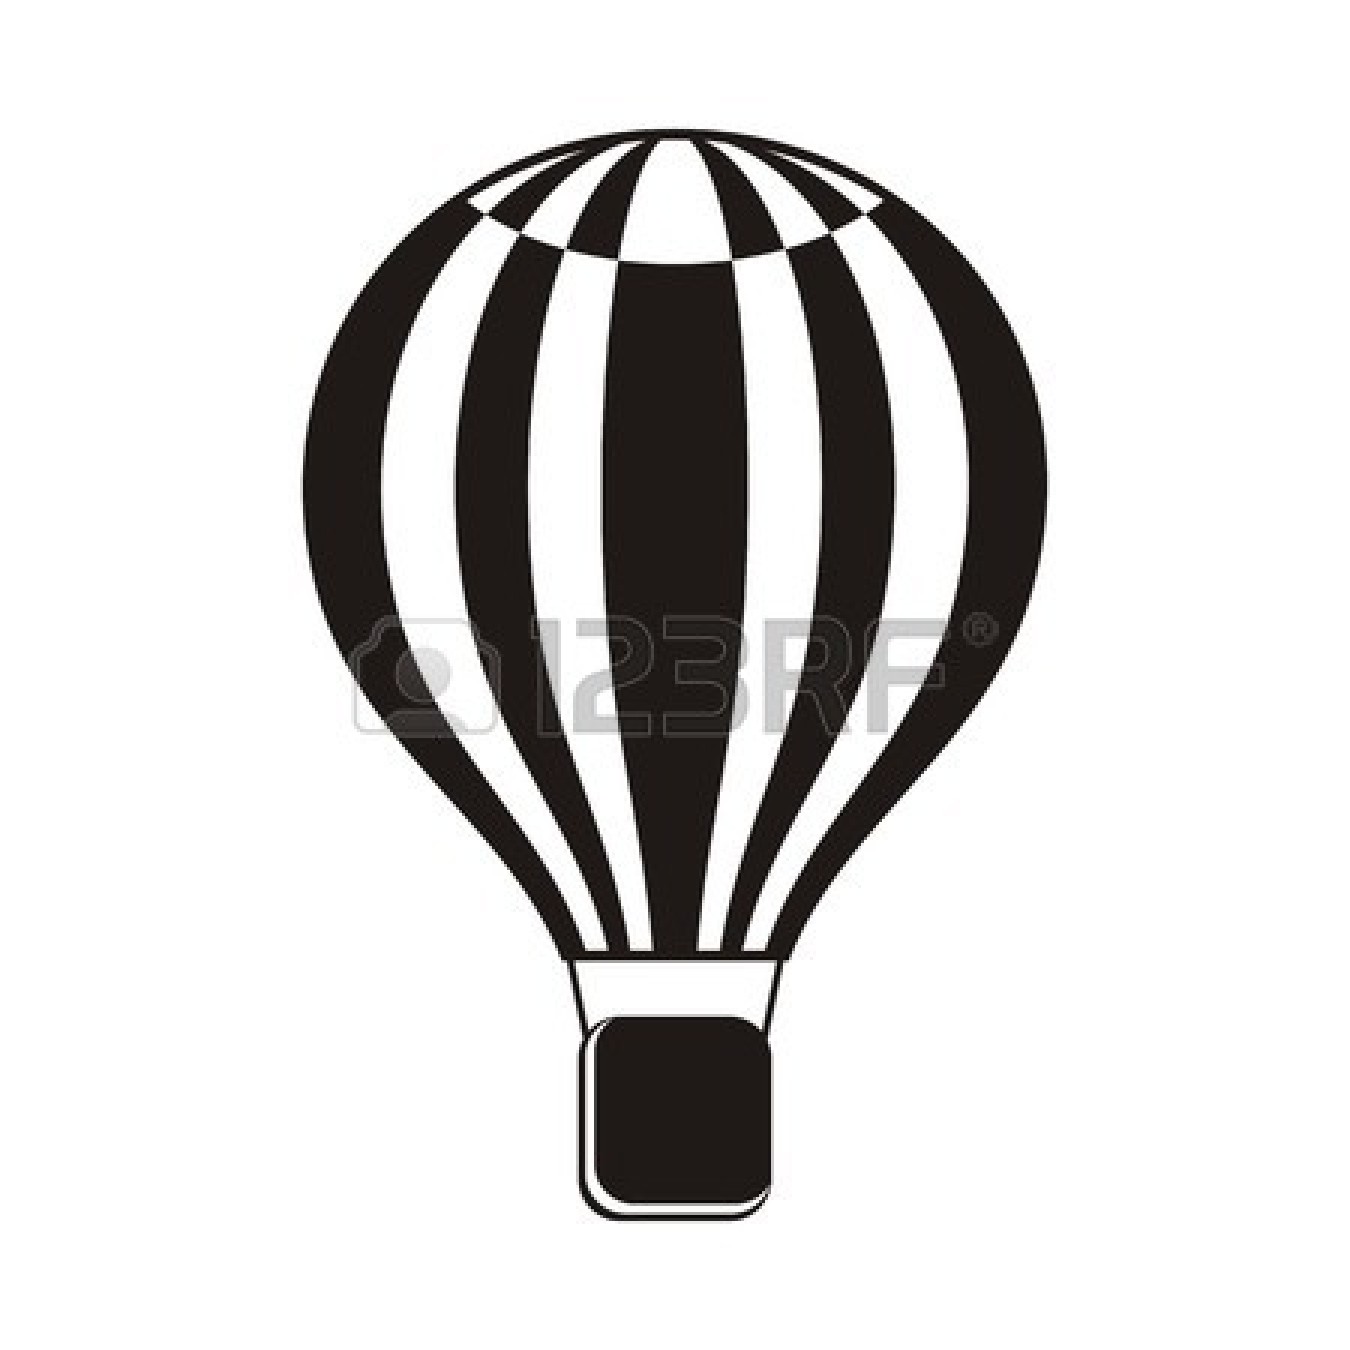 Hot air balloon  black and white black and white hot air balloon clipart free 2